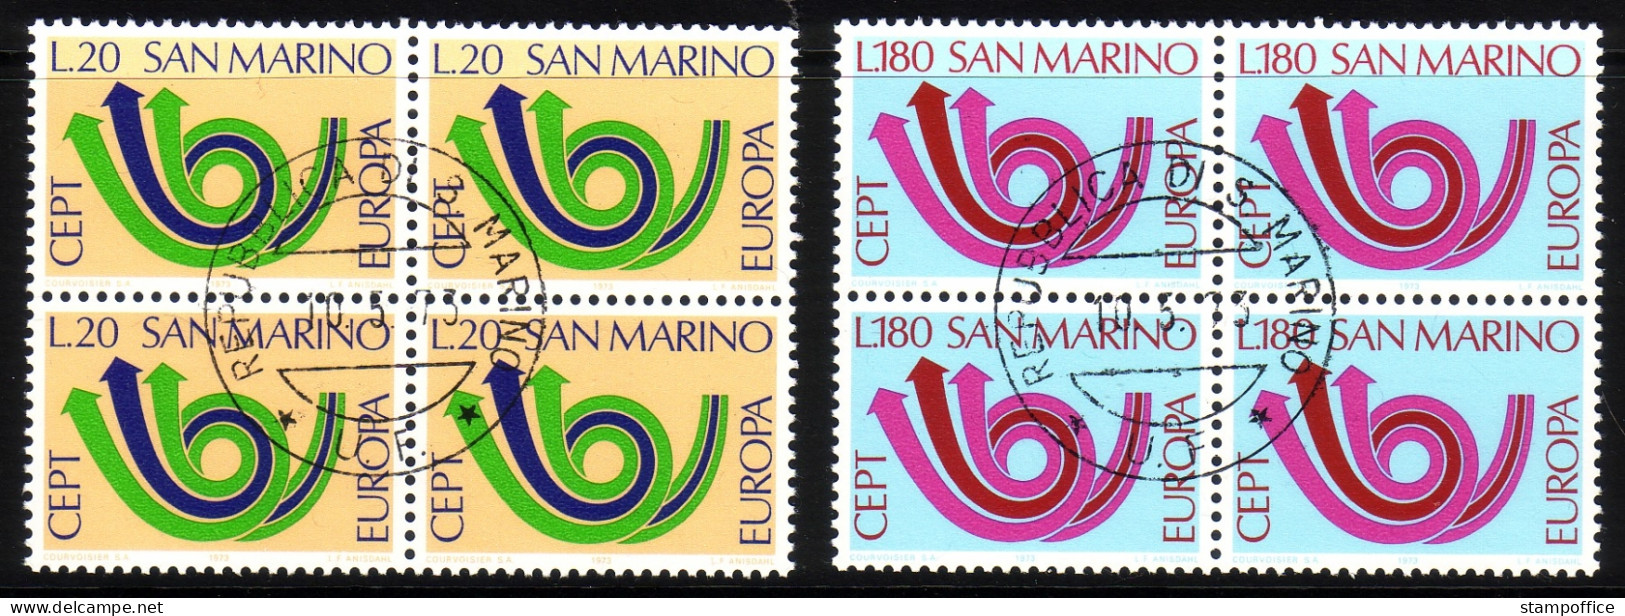 SAN MARINO MI-NR. 1029-1030 GESTEMPELT(USED) 4er BLOCK EUROPA 1973 - POSTHORN - 1973